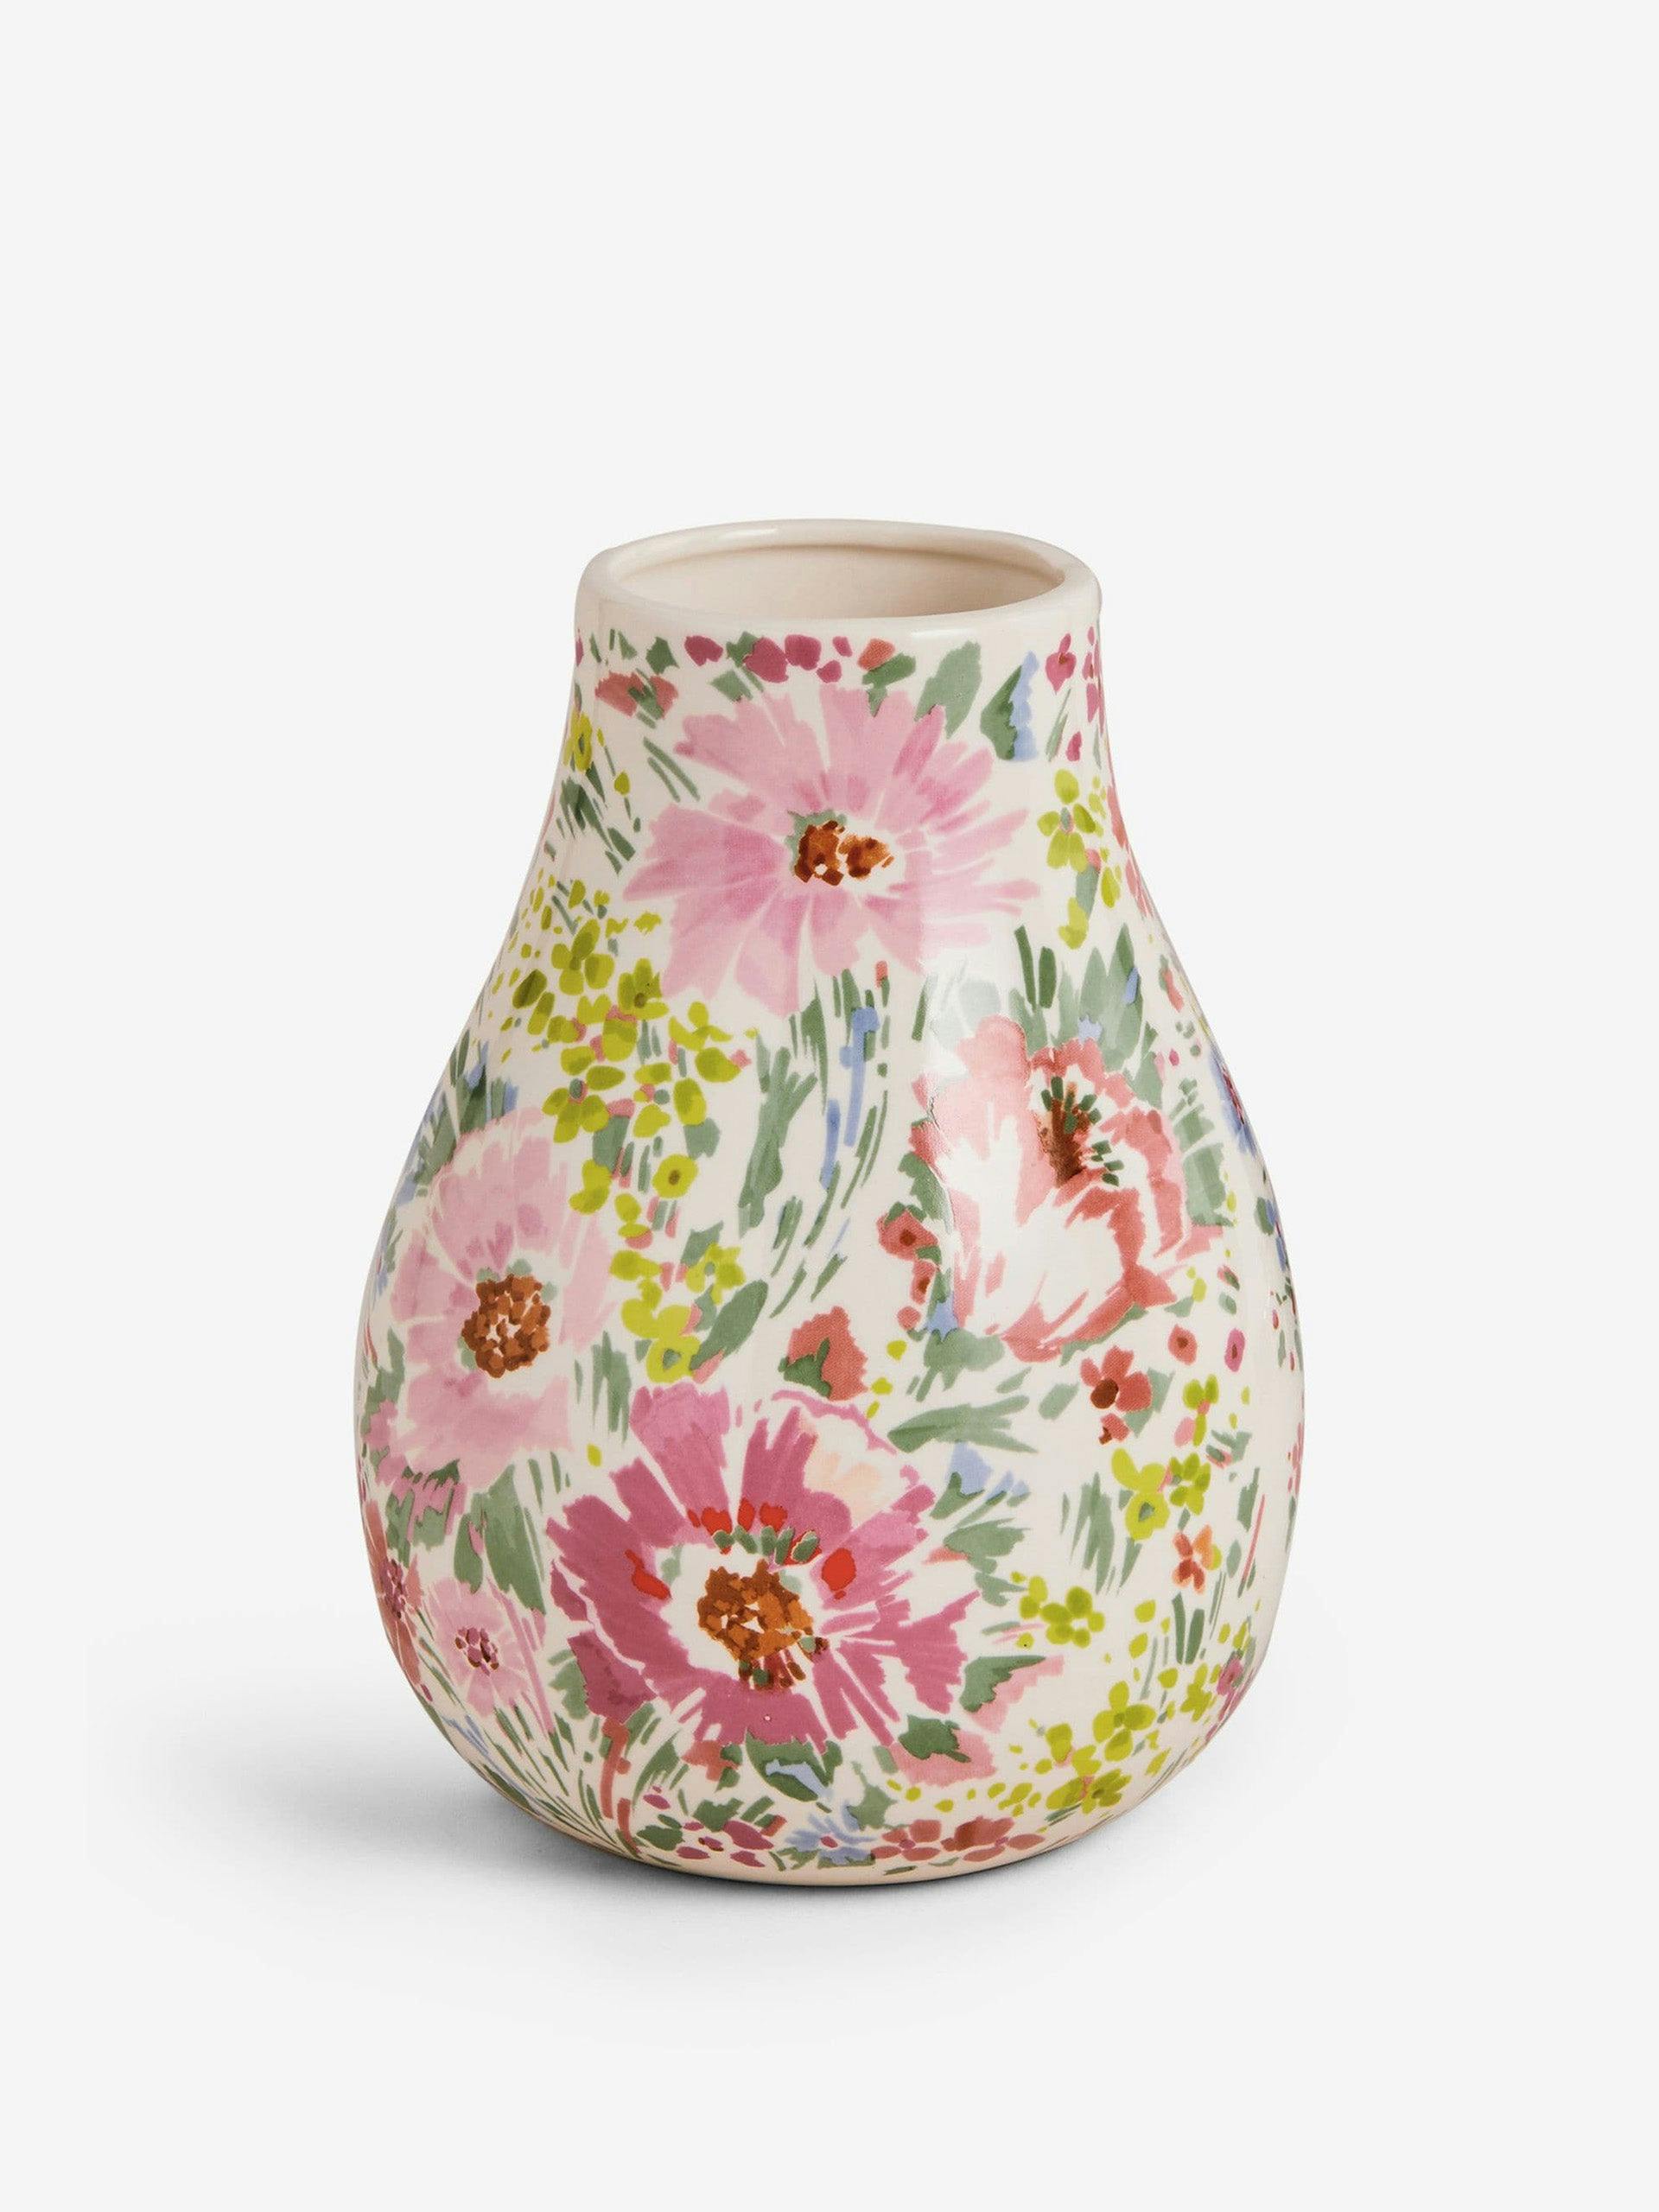 Pretty floral print ceramic flower vase